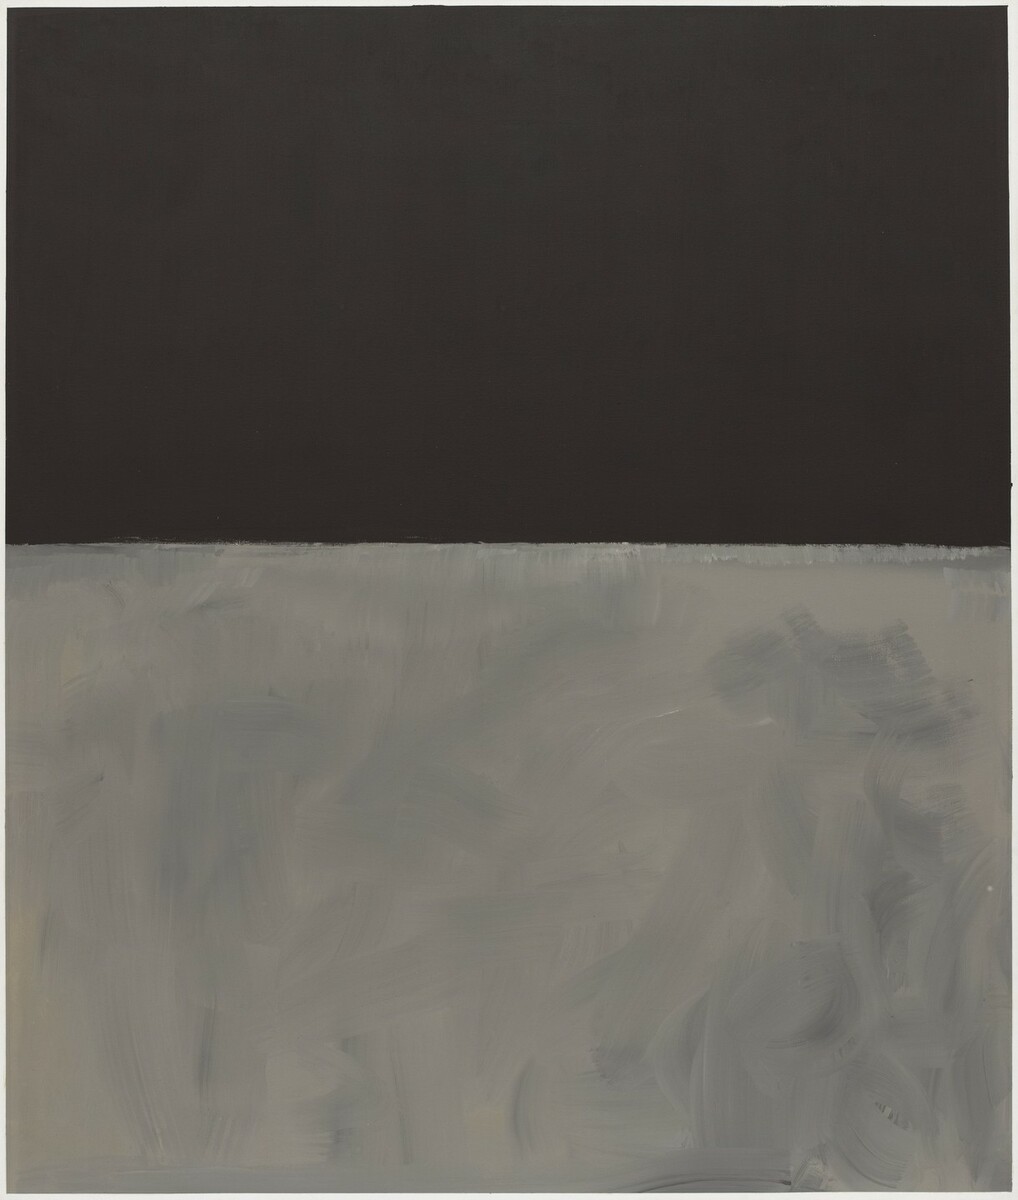 Mark Rothko, Untitled, 1969-70 #museumofmodernart #markrothko moma.org/collection/wor…